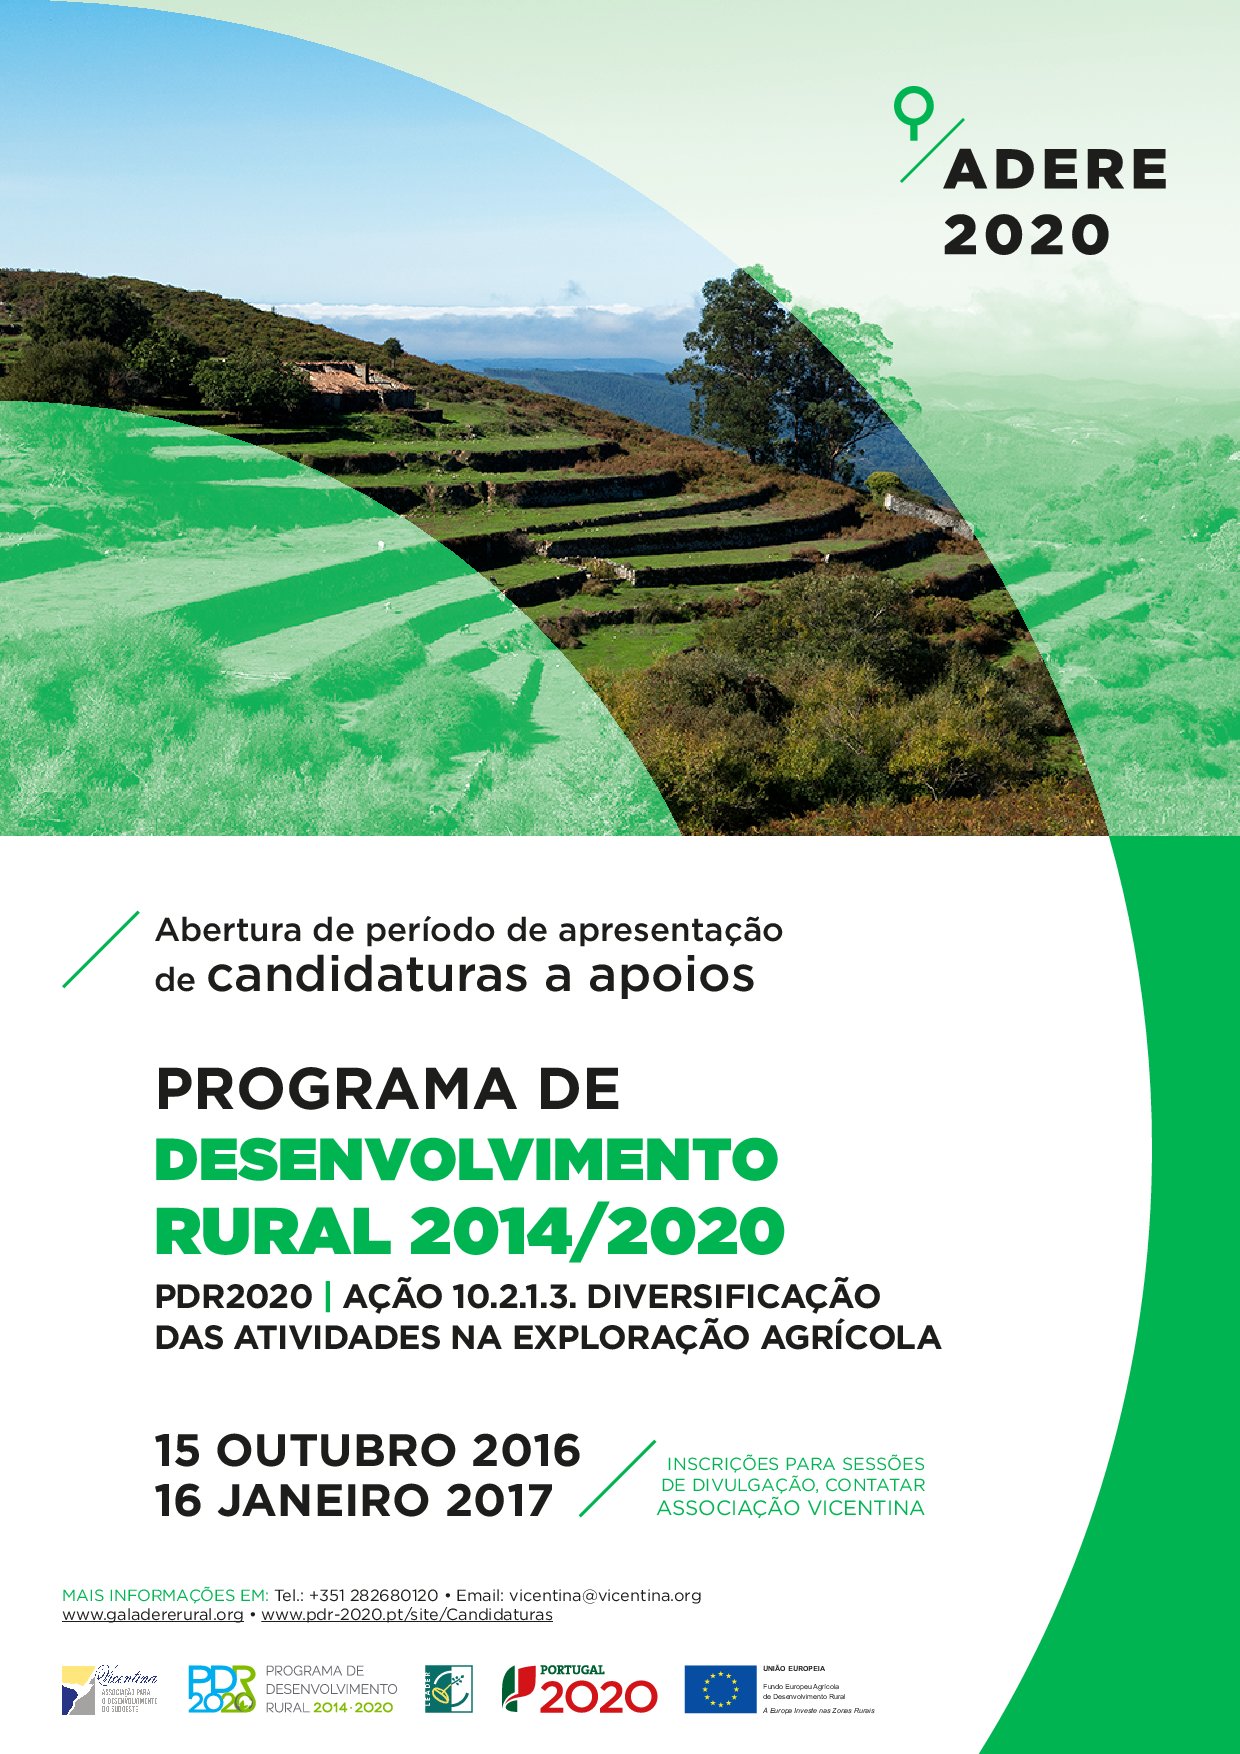 Imagem Adere 2020 - Programa de Desenvolvimento Rural 2014/2020